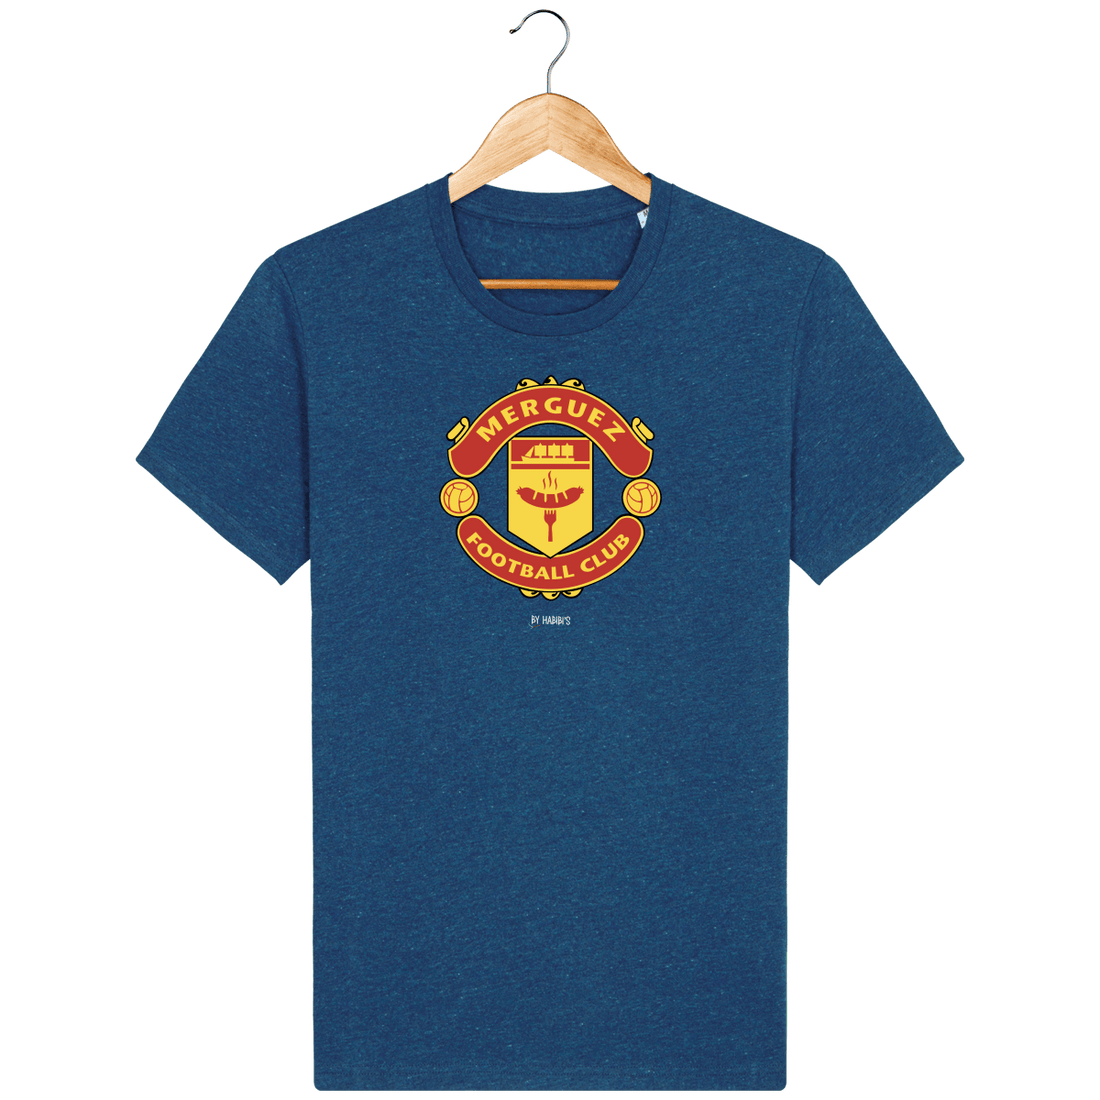 Unisexe>Tee-shirts - T-Shirt Homme <br> Merguez Football Club